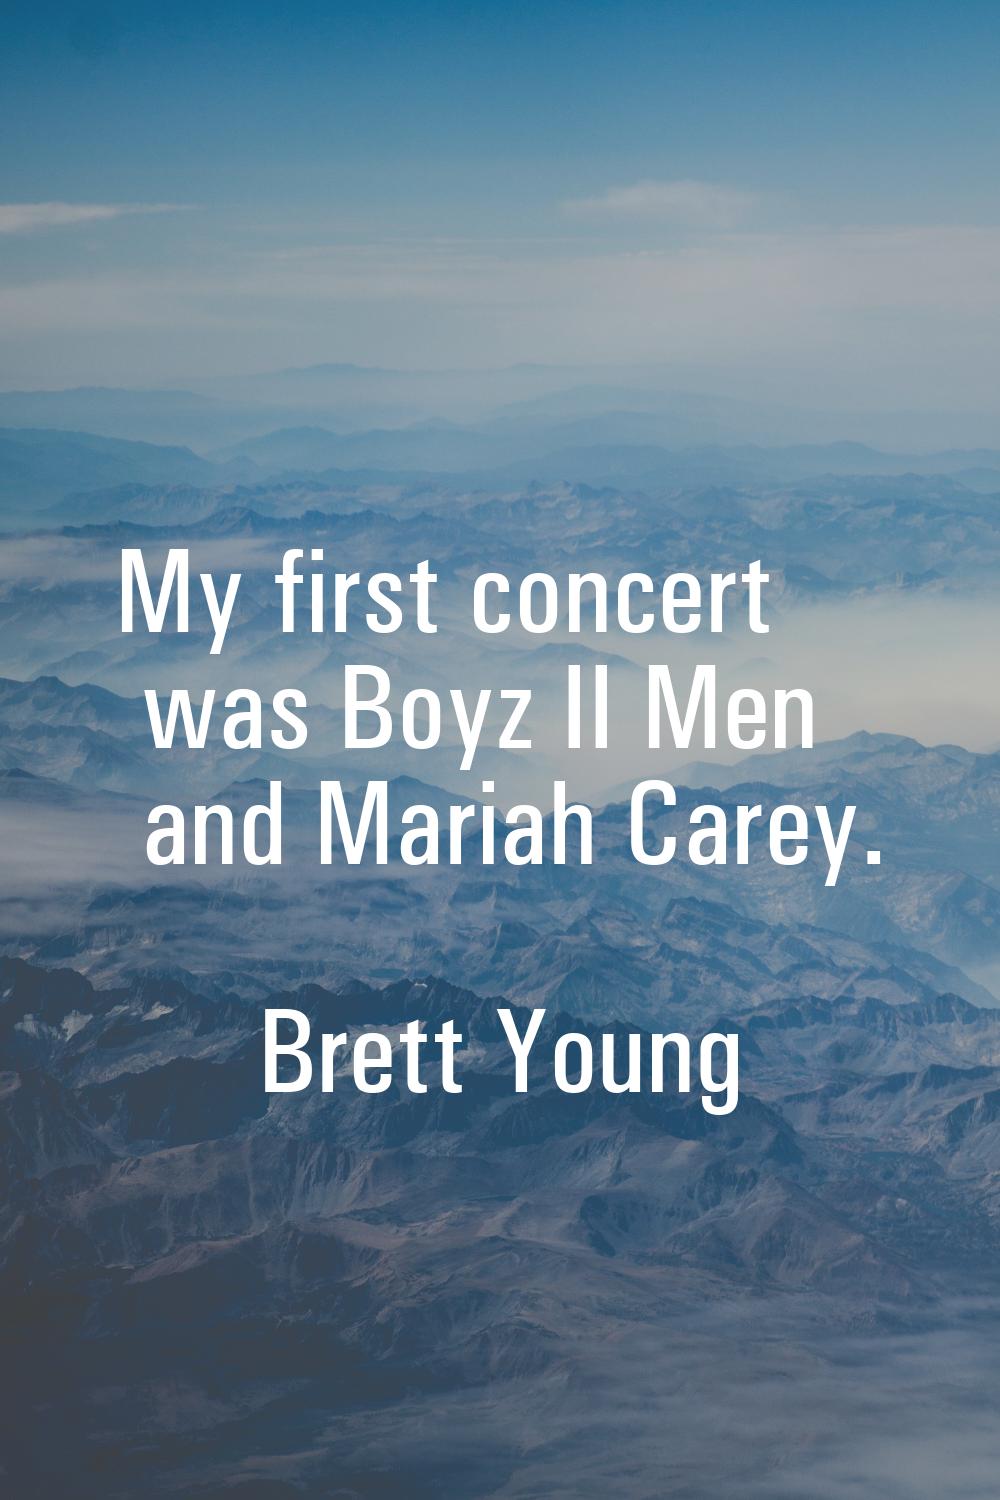 My first concert was Boyz II Men and Mariah Carey.